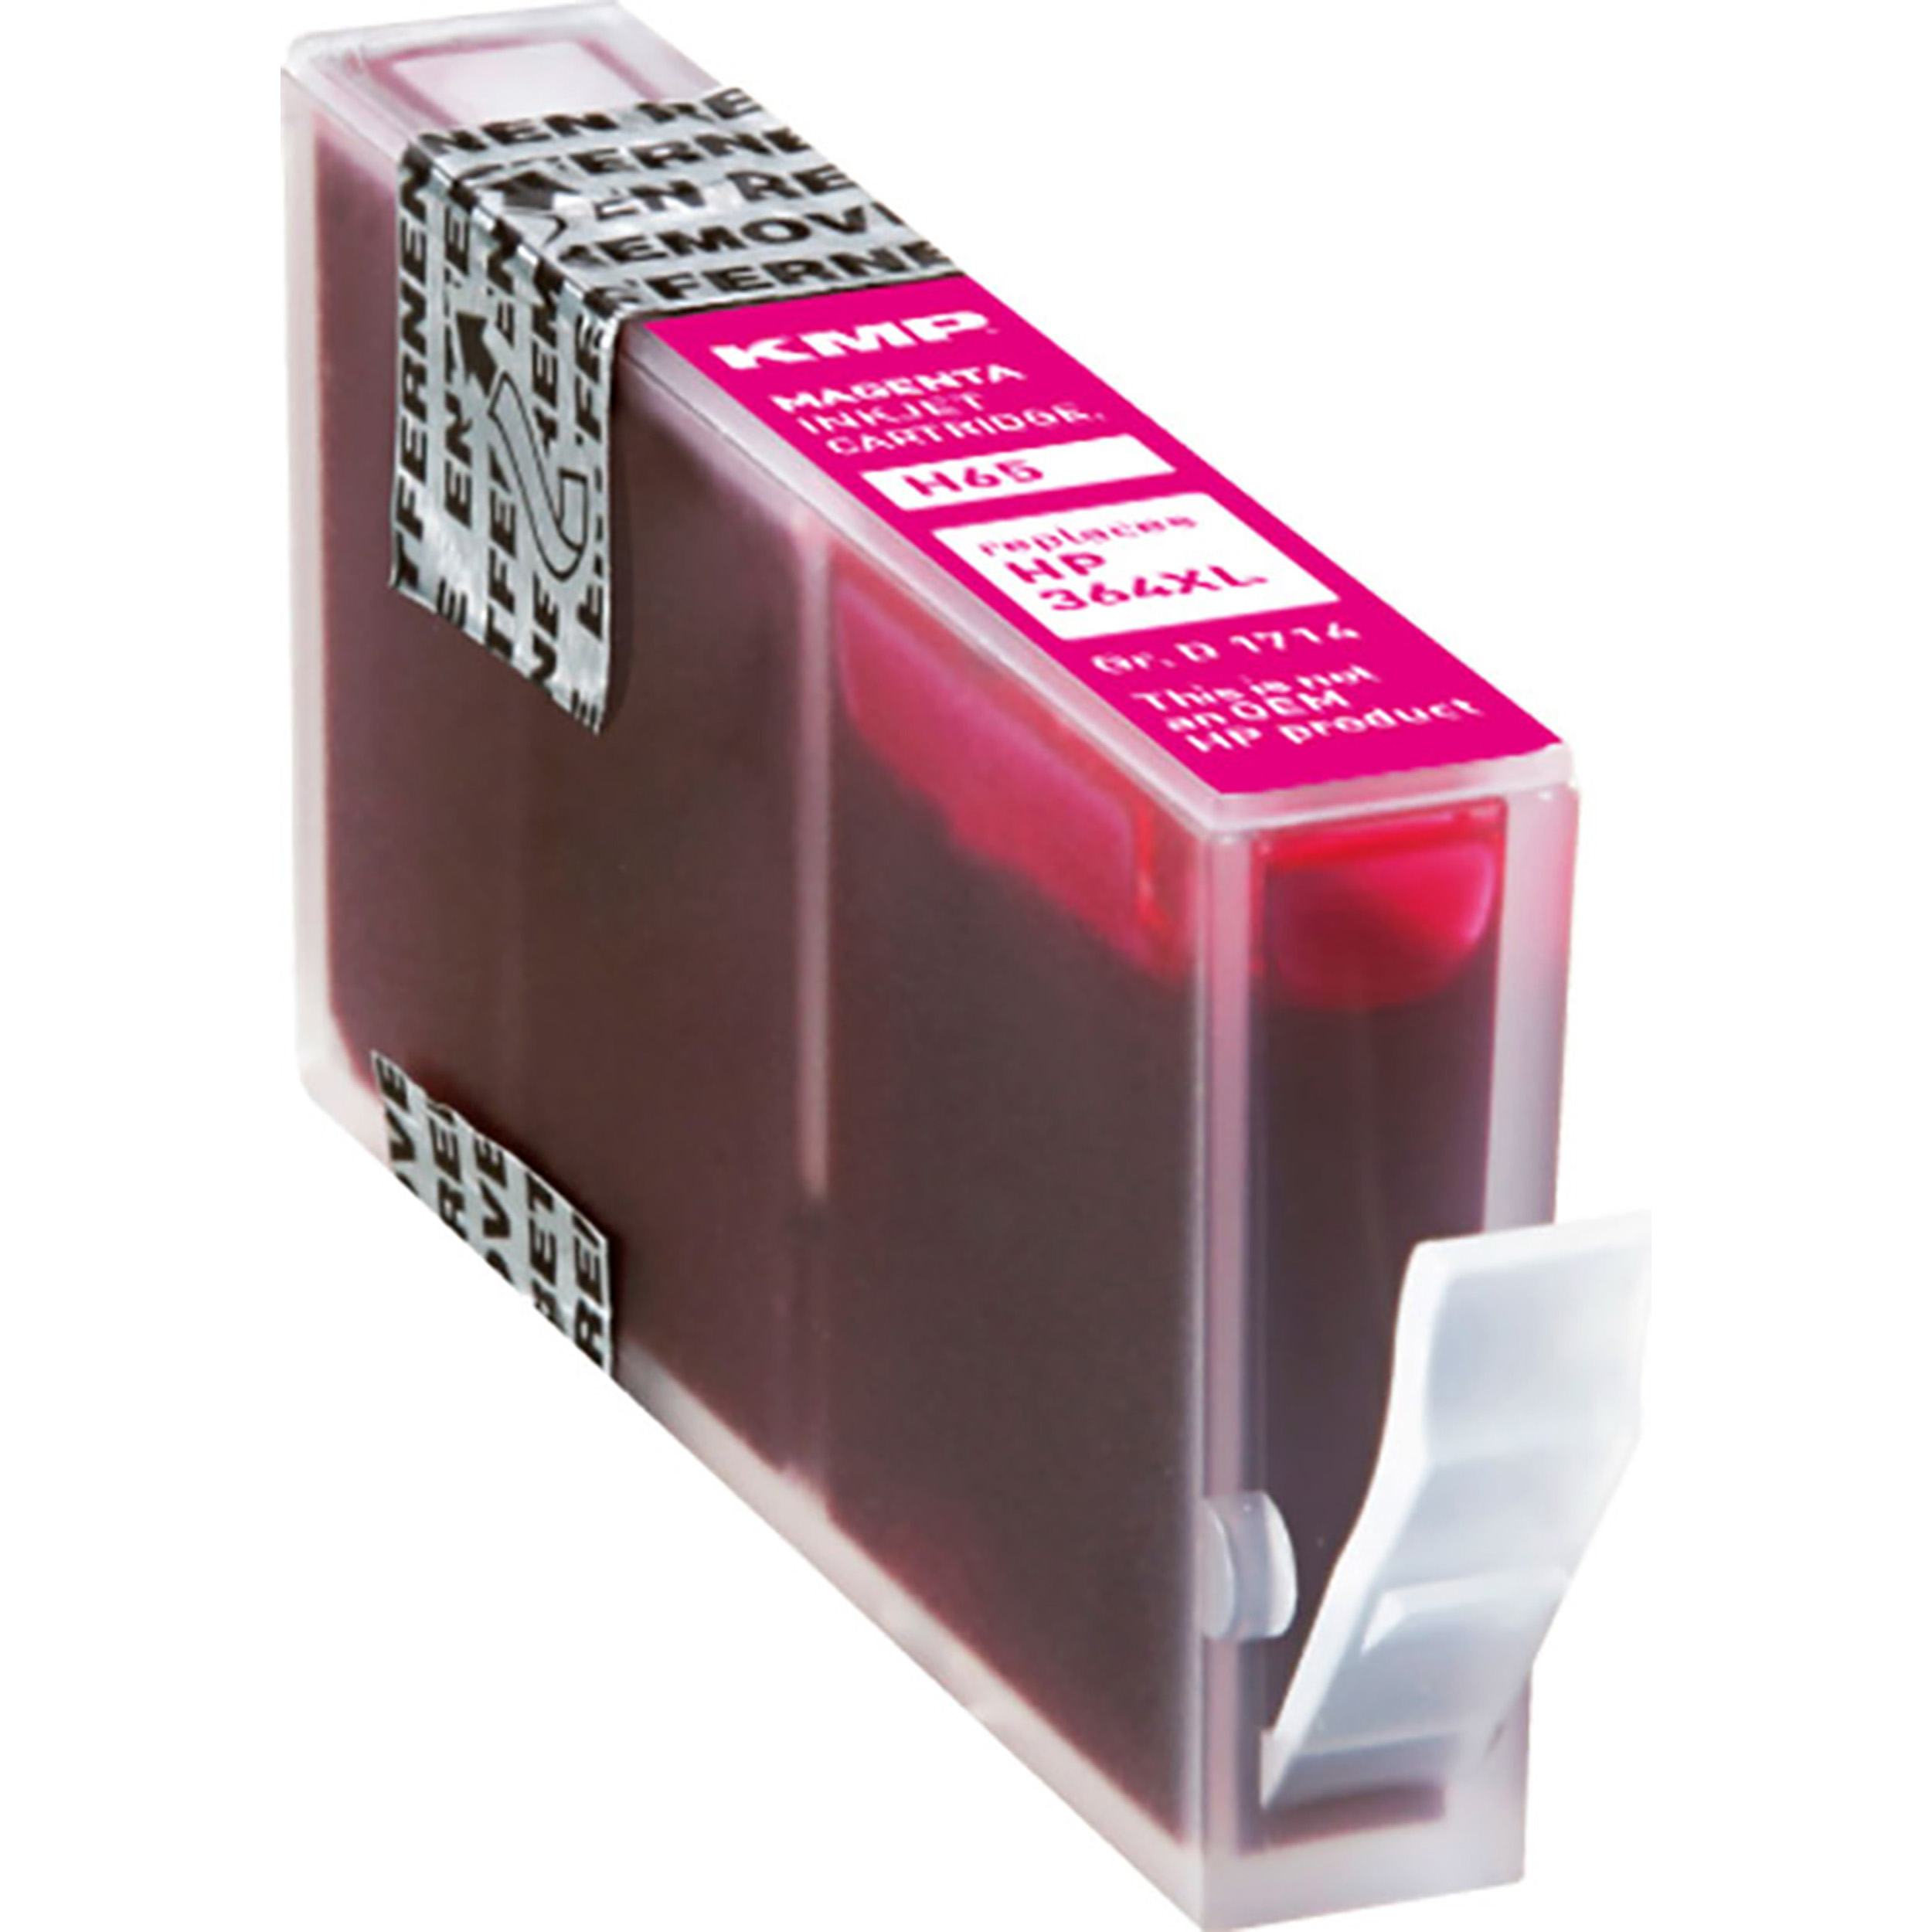 HP KMP Cartridge Tintenpatrone Ink für 364XL Magenta (CB324EE) (CB324EE) magenta